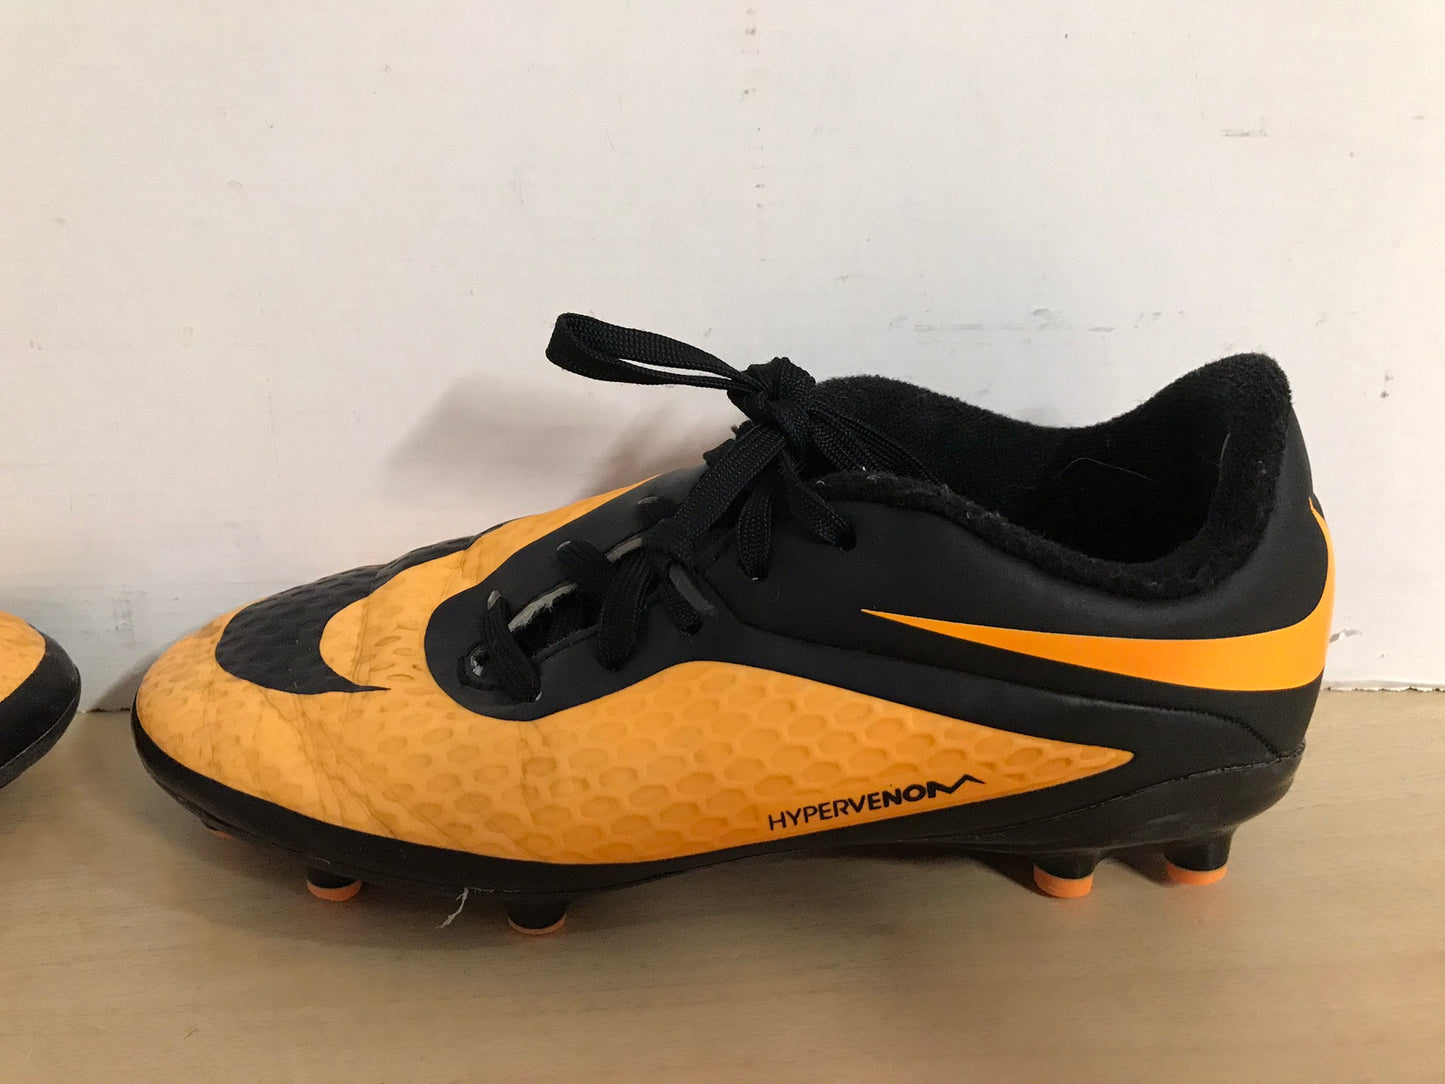 Soccer Shoes Cleats Child Size 1.5 Nike Hypervenom Tangerine and Black